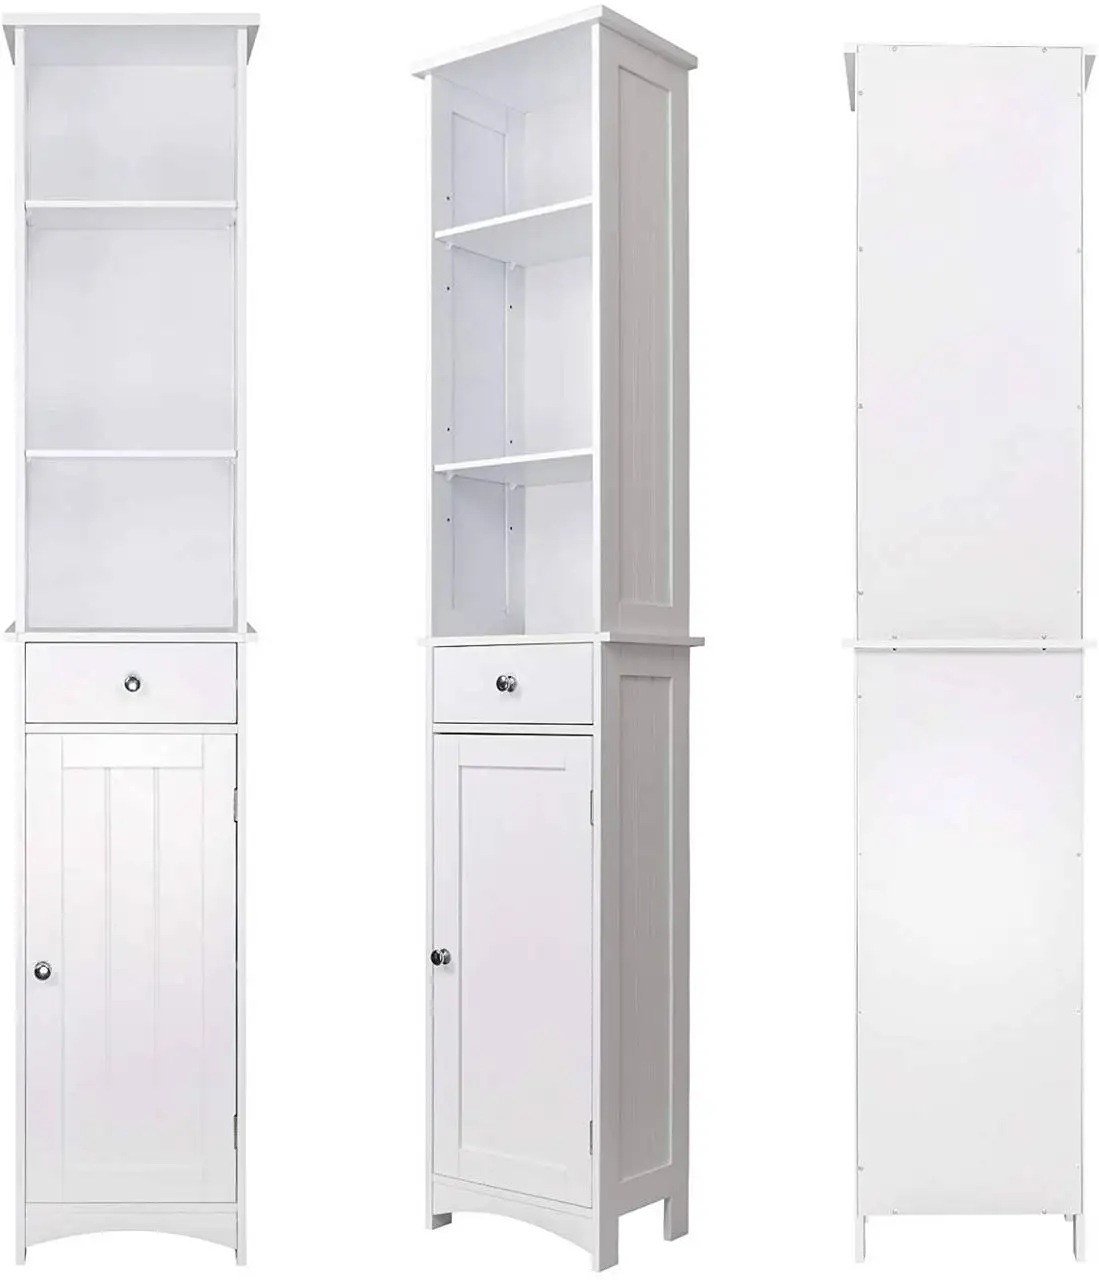  Gabinete alto de almacenamiento para baño, estantes de  almacenamiento independientes de 3 niveles, vitrina de oficina en casa,  estantería con puertas, cajones, luces LED, estante ajustable para cocina,  baño, oficina (blanco) 